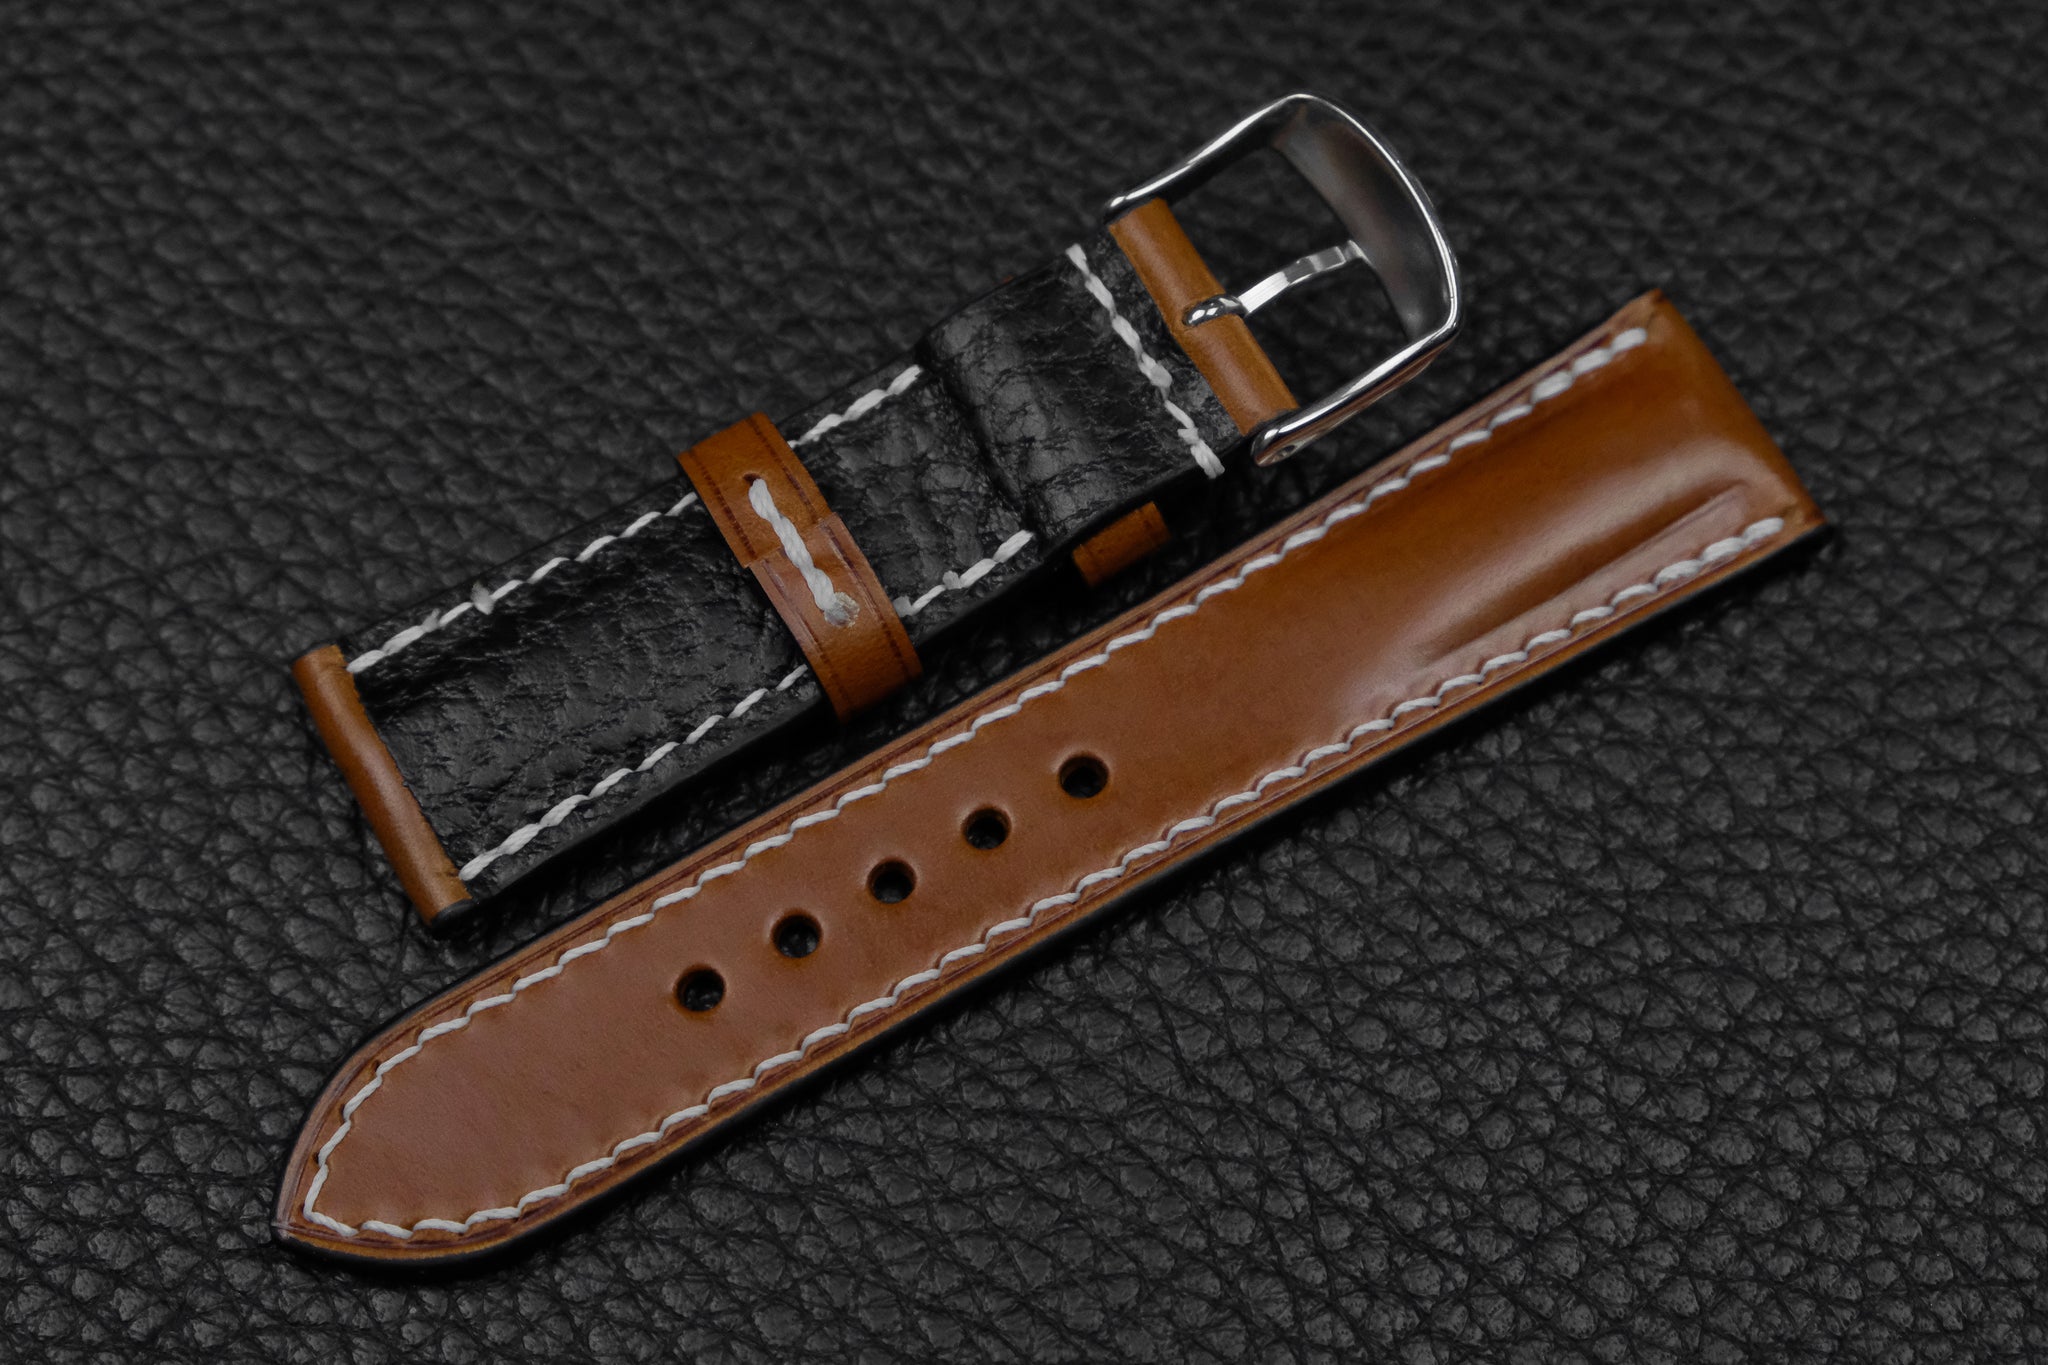 Black with orange stitch padded leather strap - 22mm